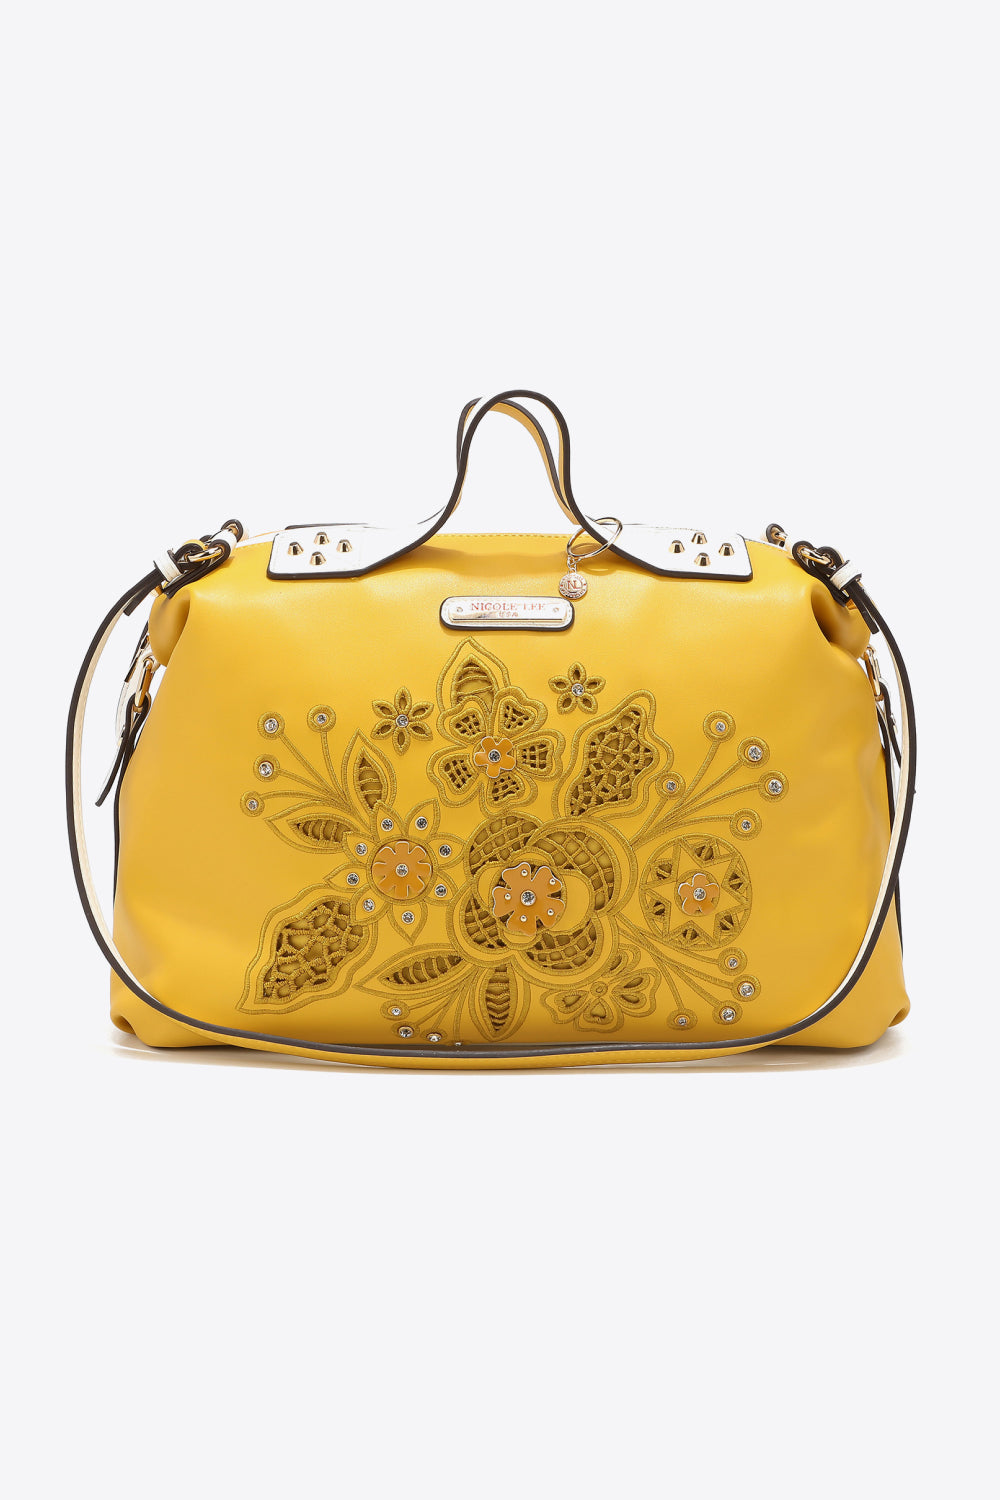 Handbags: Nicole Lee USA Evolve Handbag